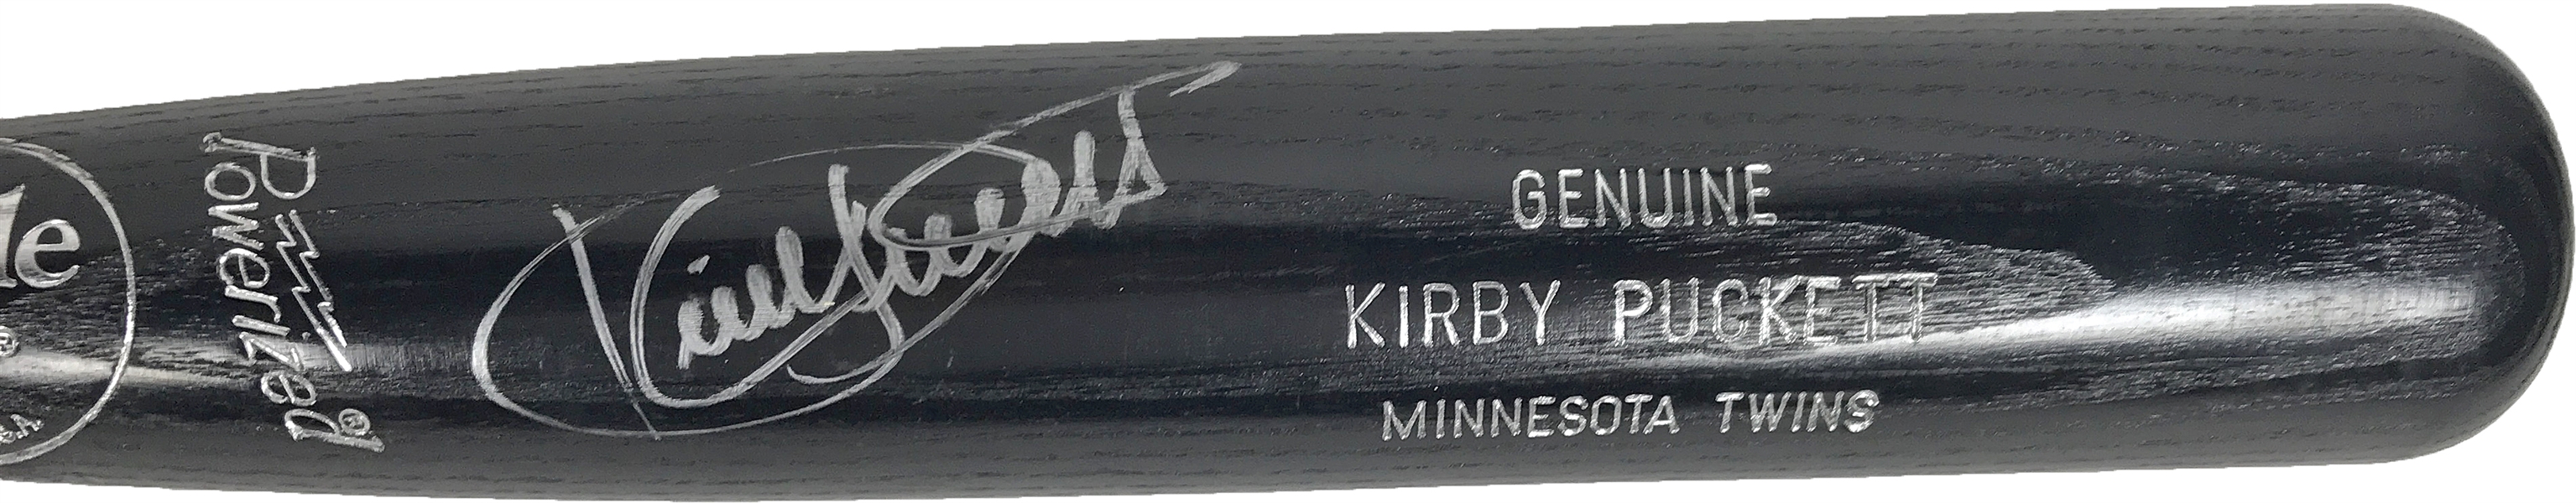 Kirby Puckett Near-Mint Signed Personal Model Baseball Bat (PSA/DNA)